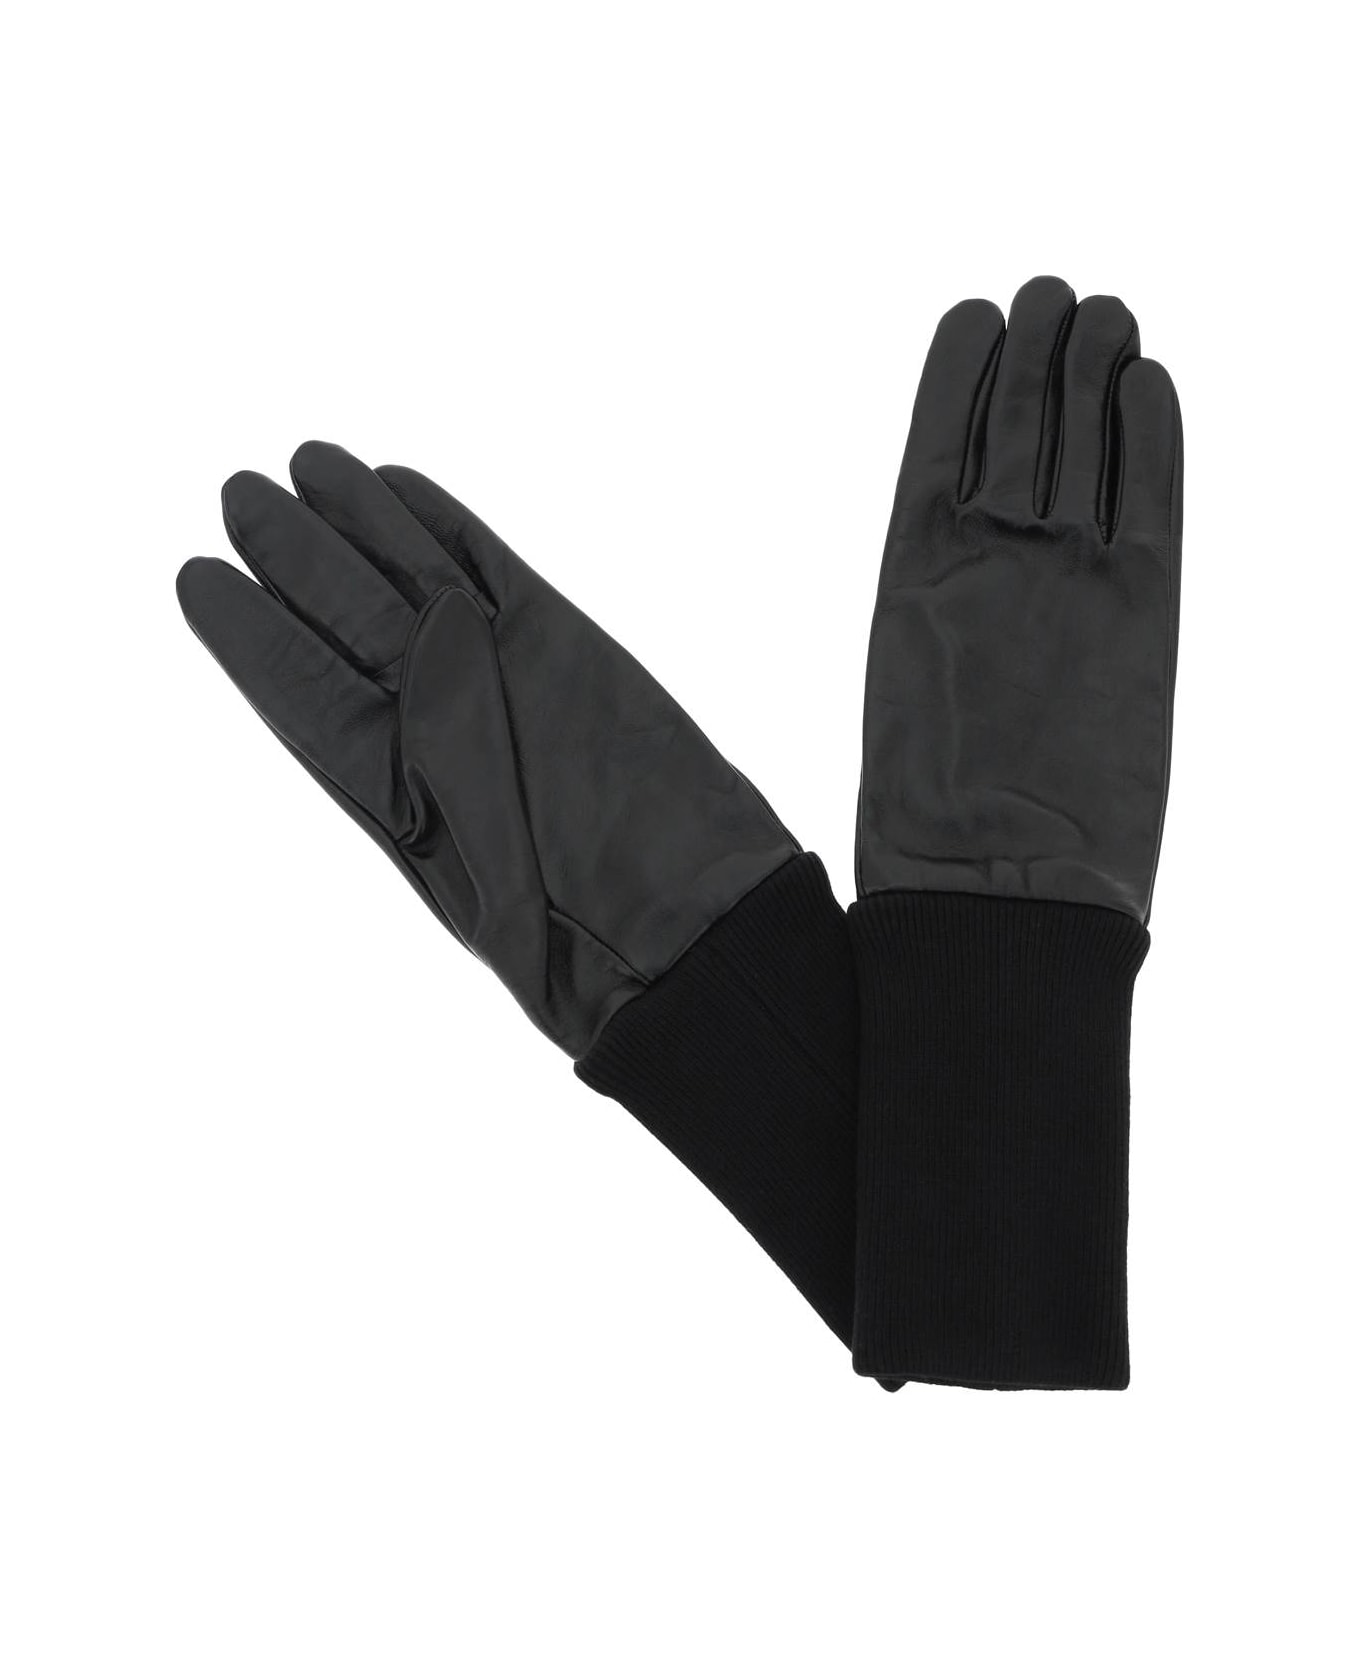 032c Leather Gloves - BLACK (Black)